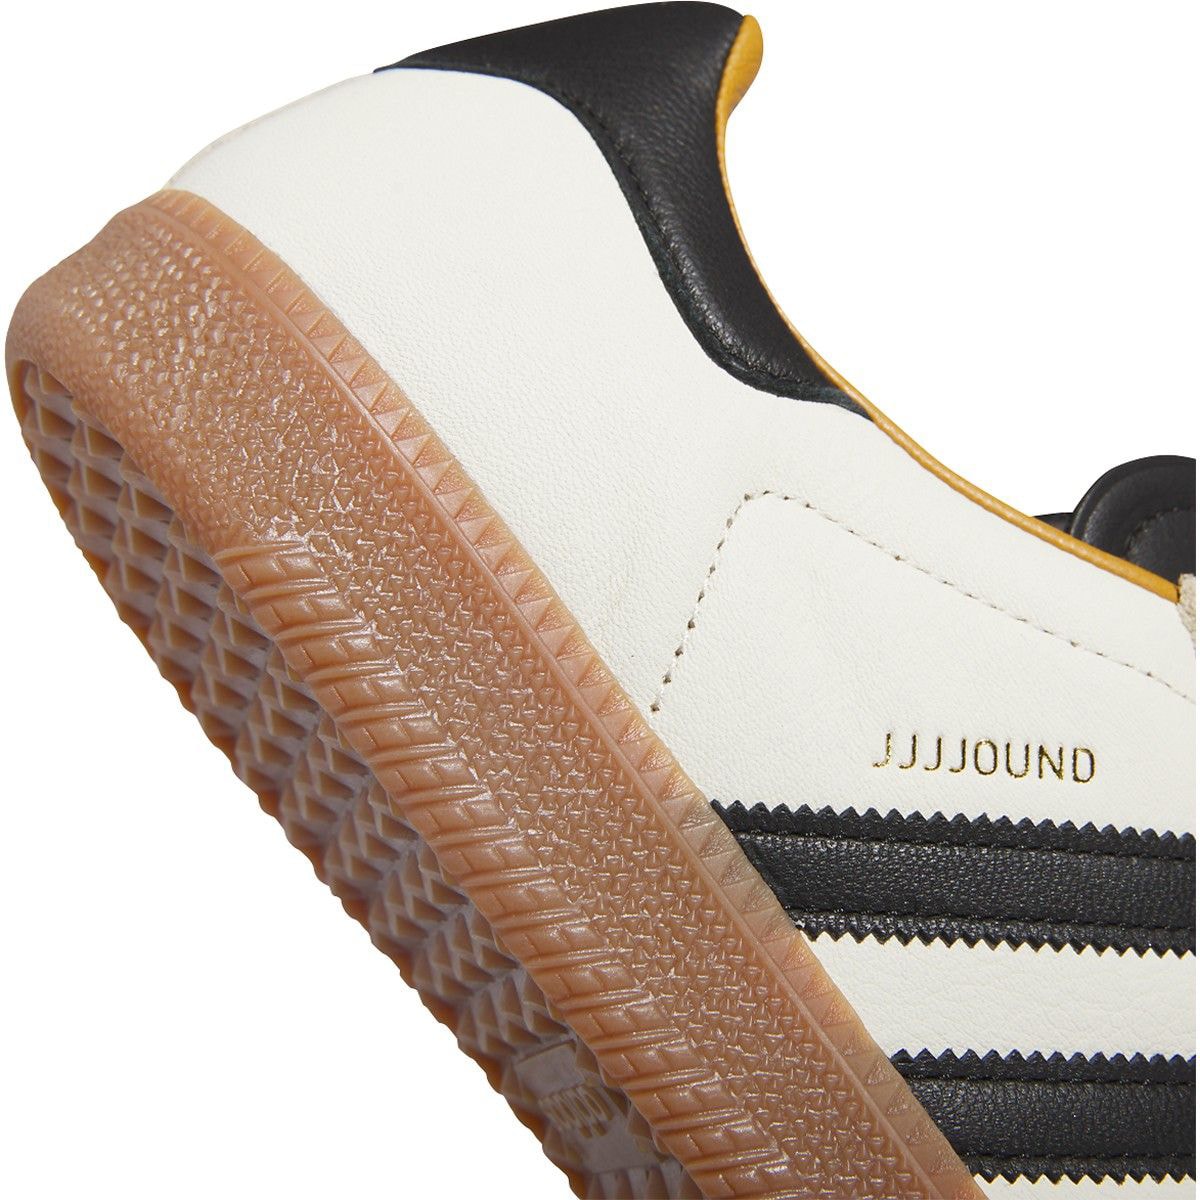 jjjjound adidas samba black white beige release info date store list buying guide photos price.  